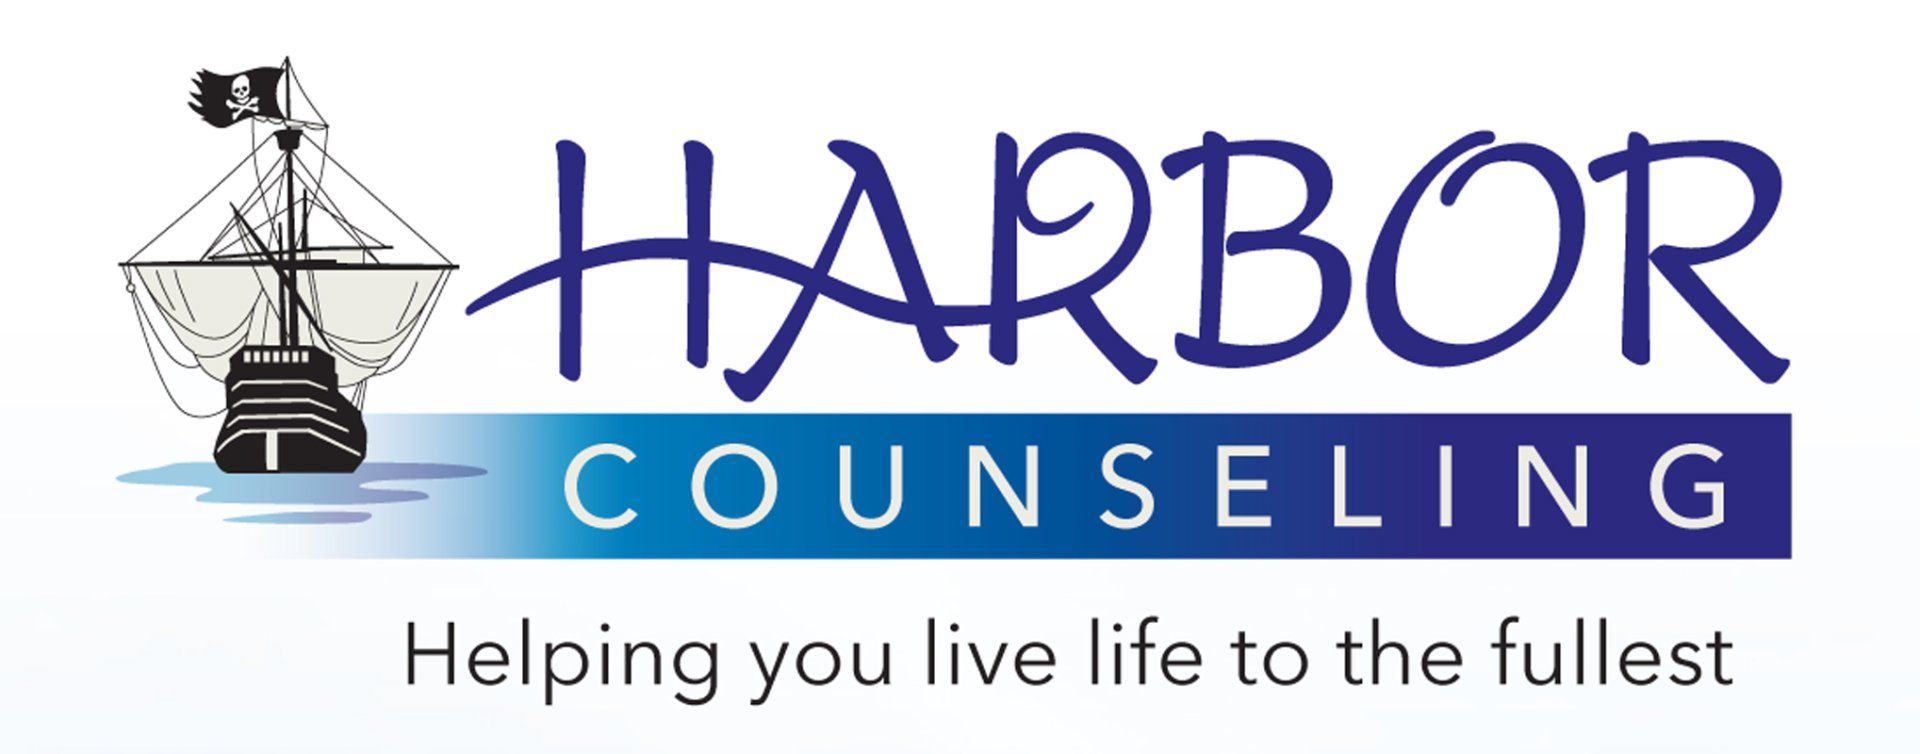 Harbor Counseling - Logo